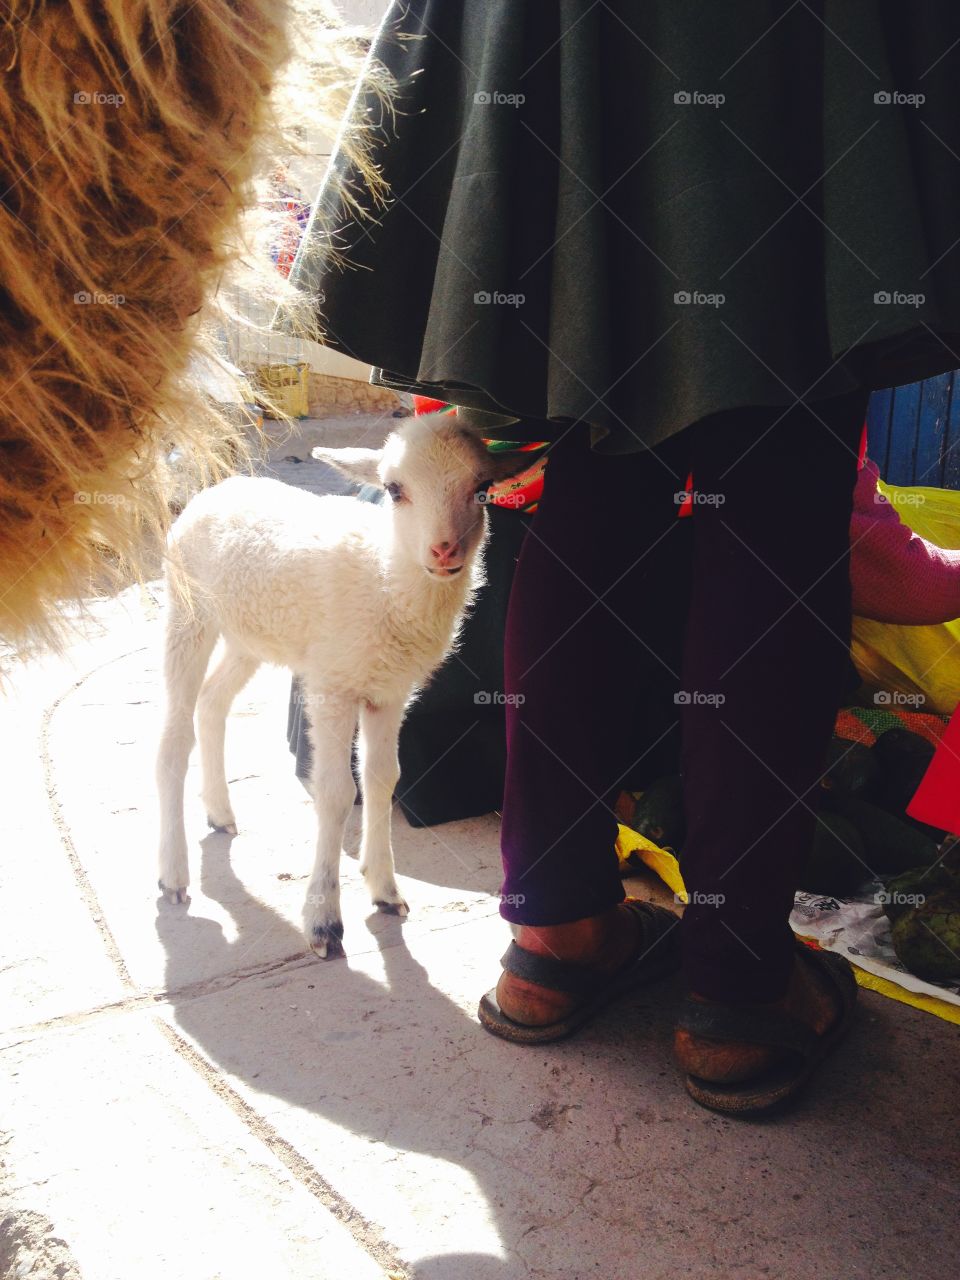 A lamb stays close to her owner in Peru